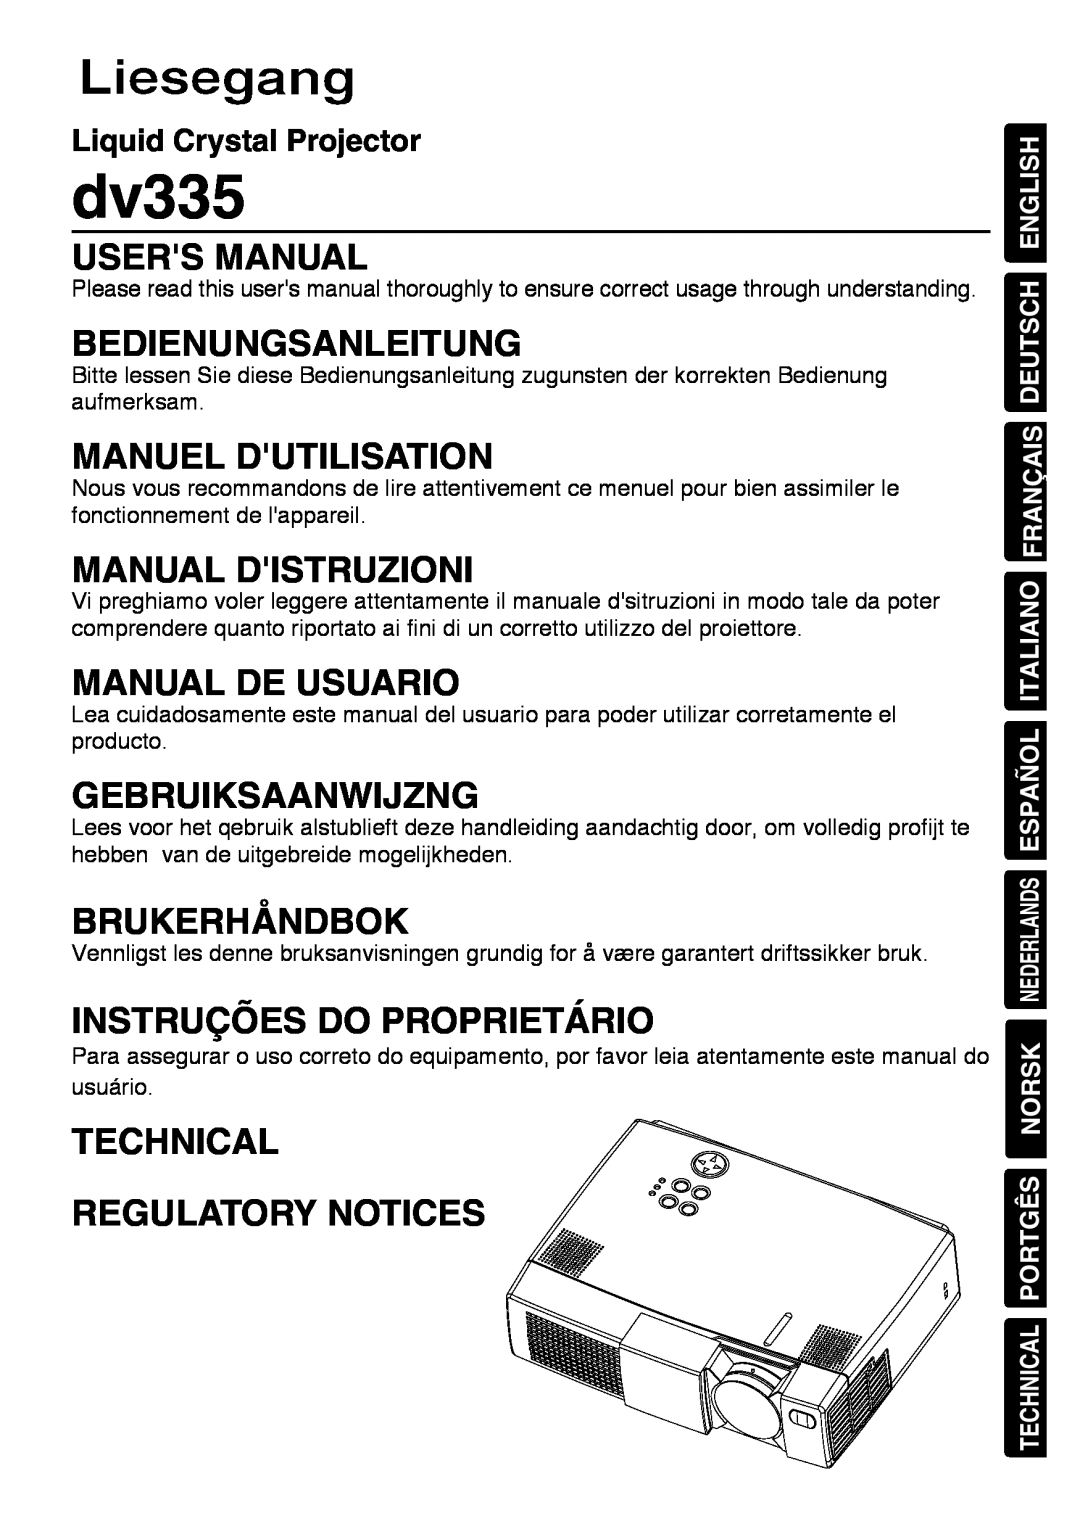 Liesegang dv335 user manual Users Manual, Bedienungsanleitung, Manuel Dutilisation, Manual Distruzioni, Manual De Usuario 